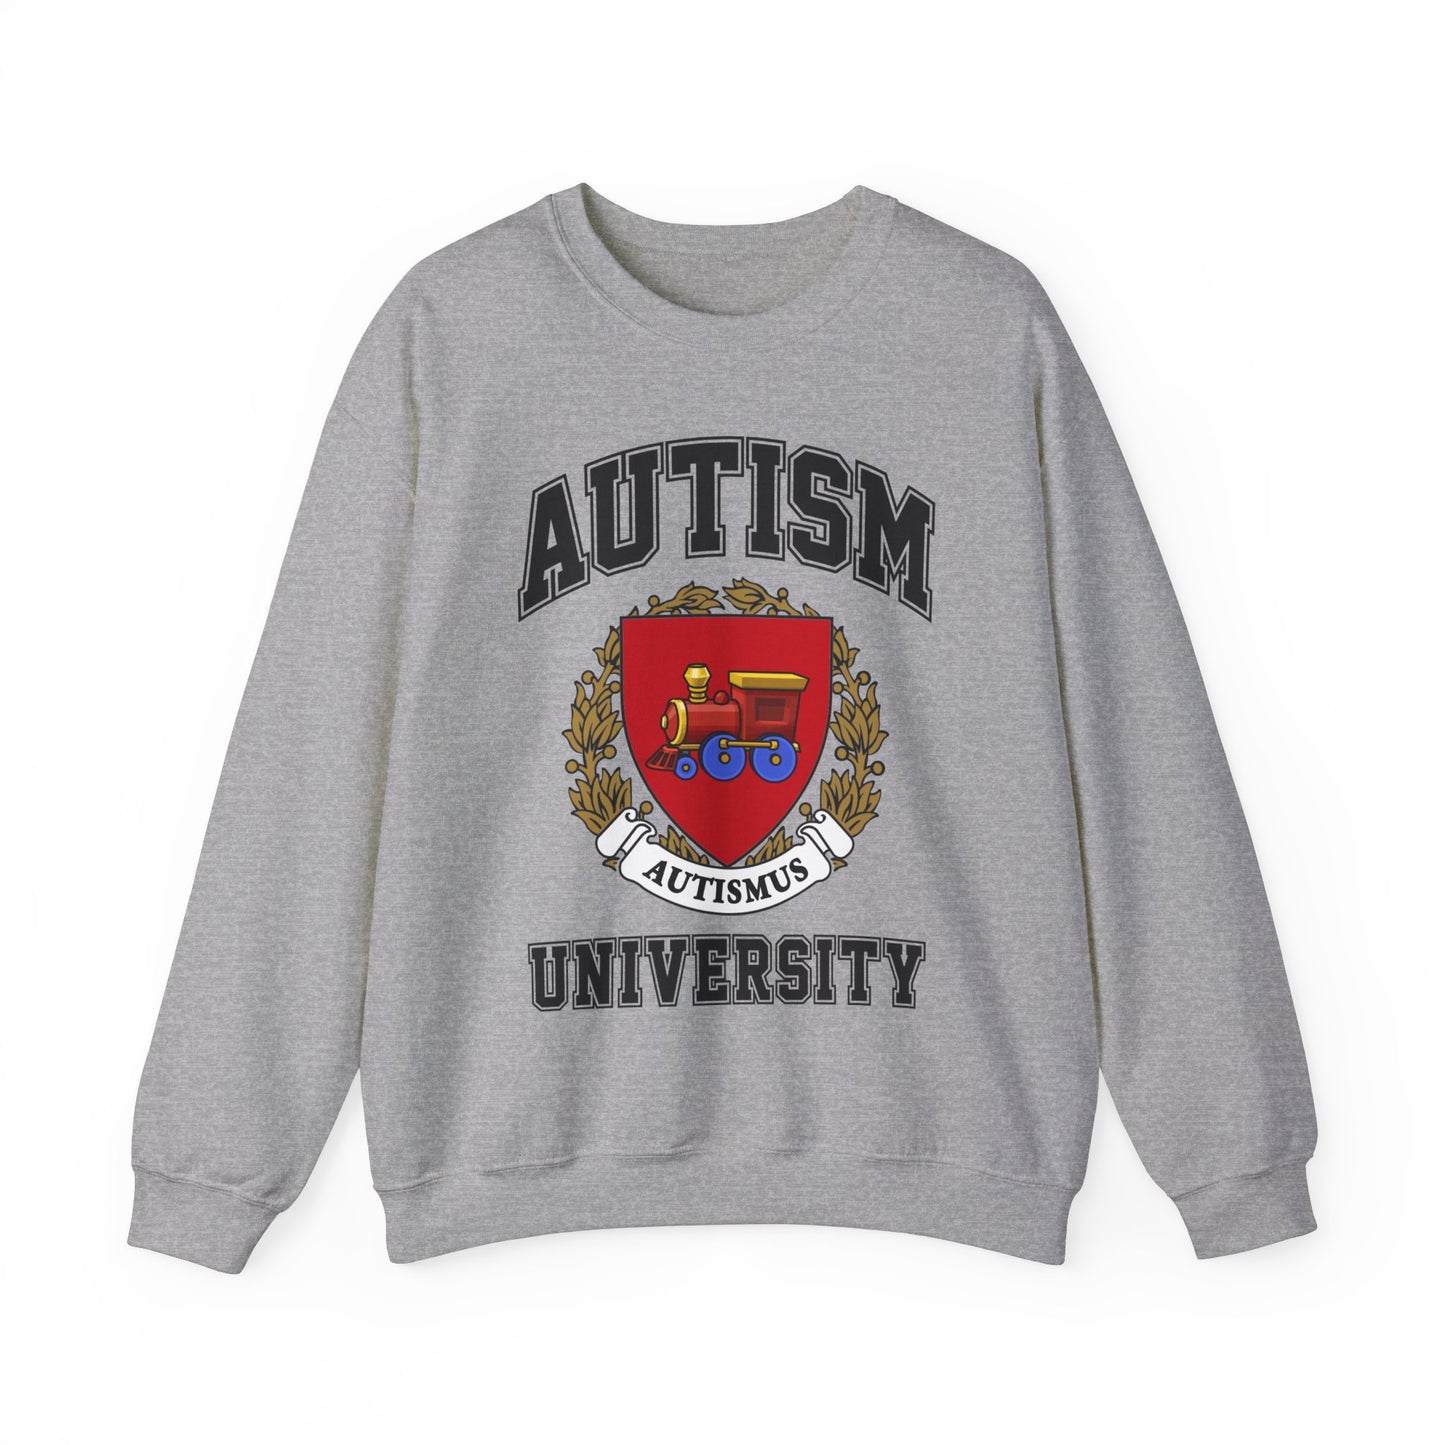 Autism University Sweatshirt